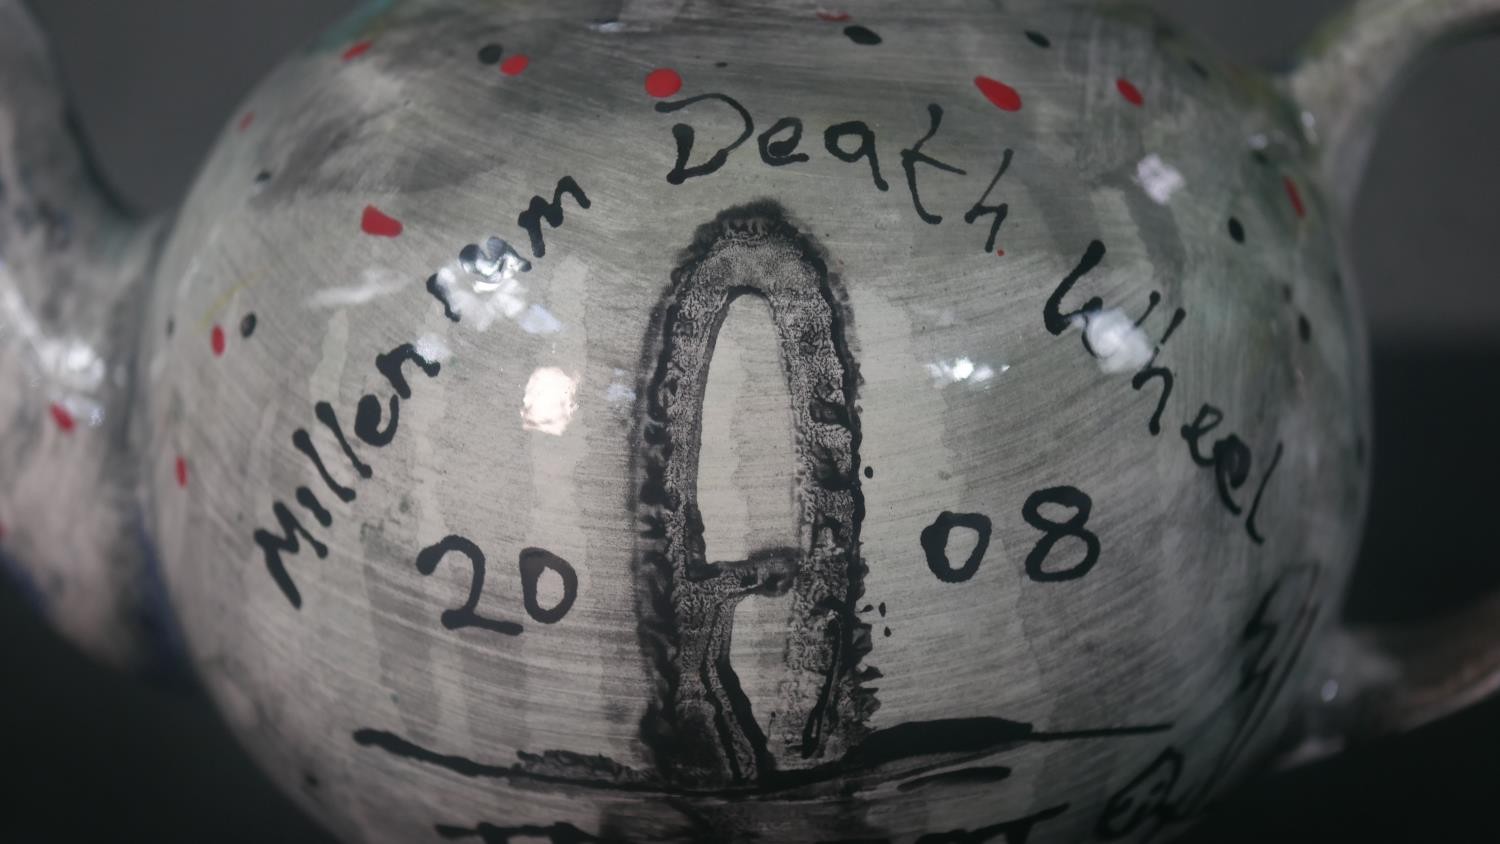 STOT21stCplanB (Harry Adams), 20th Century, Millennium Death Wheel teapot, glazed and hand painted - Image 2 of 13